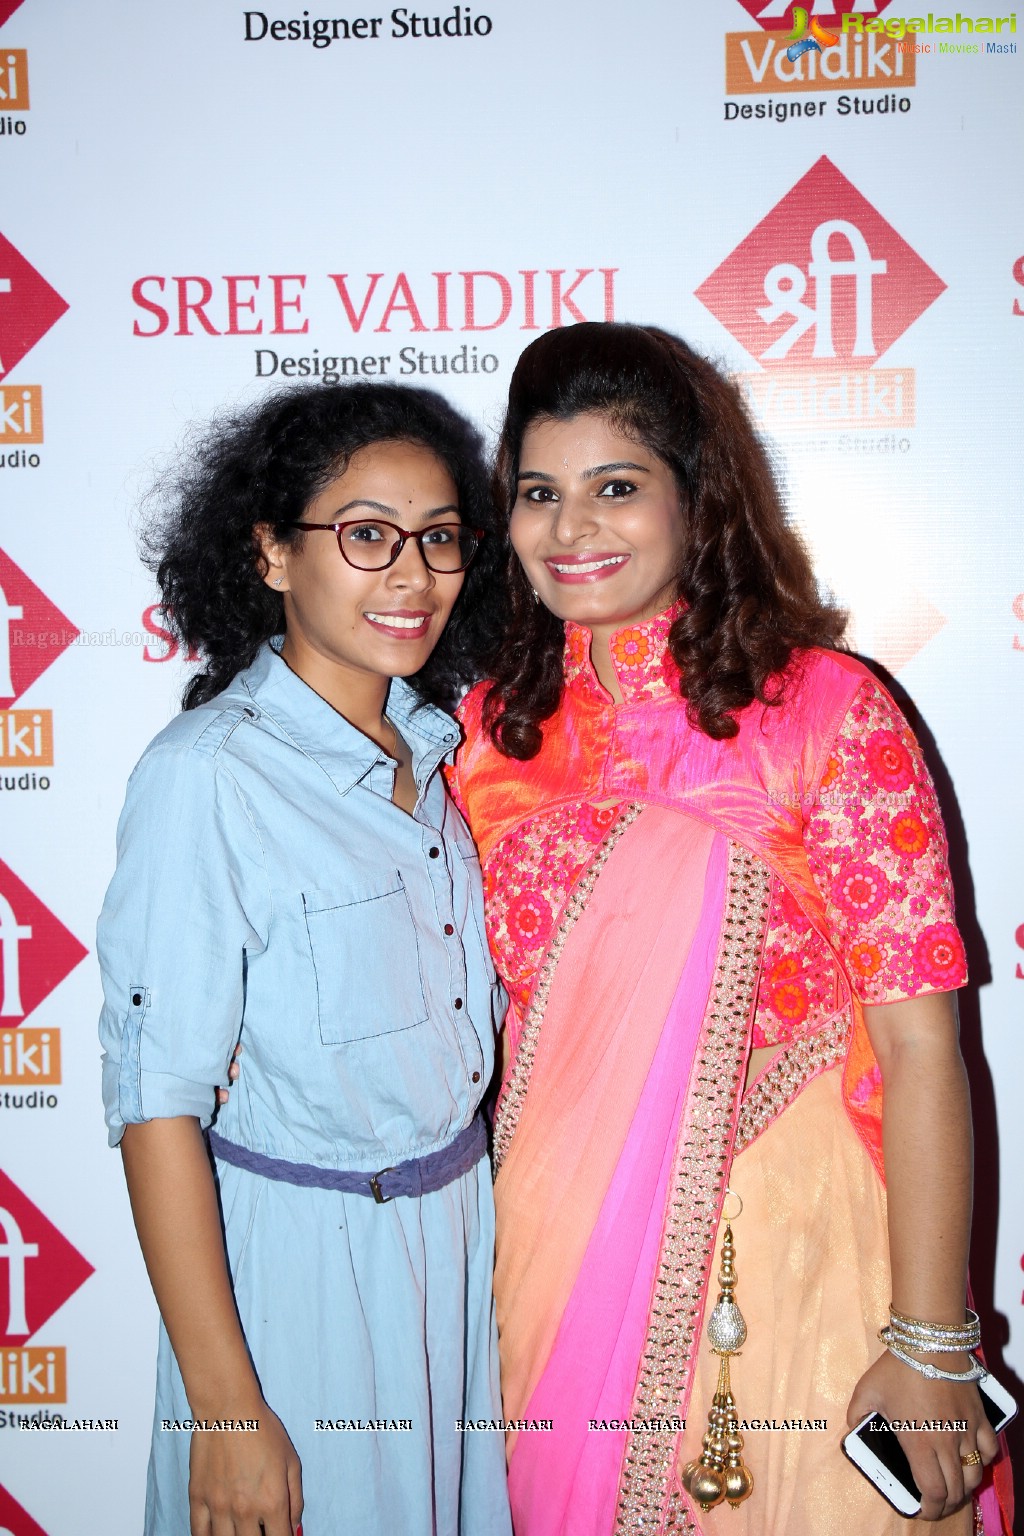 Sree Vaidiki Designer Studio Launch, Hyderabad